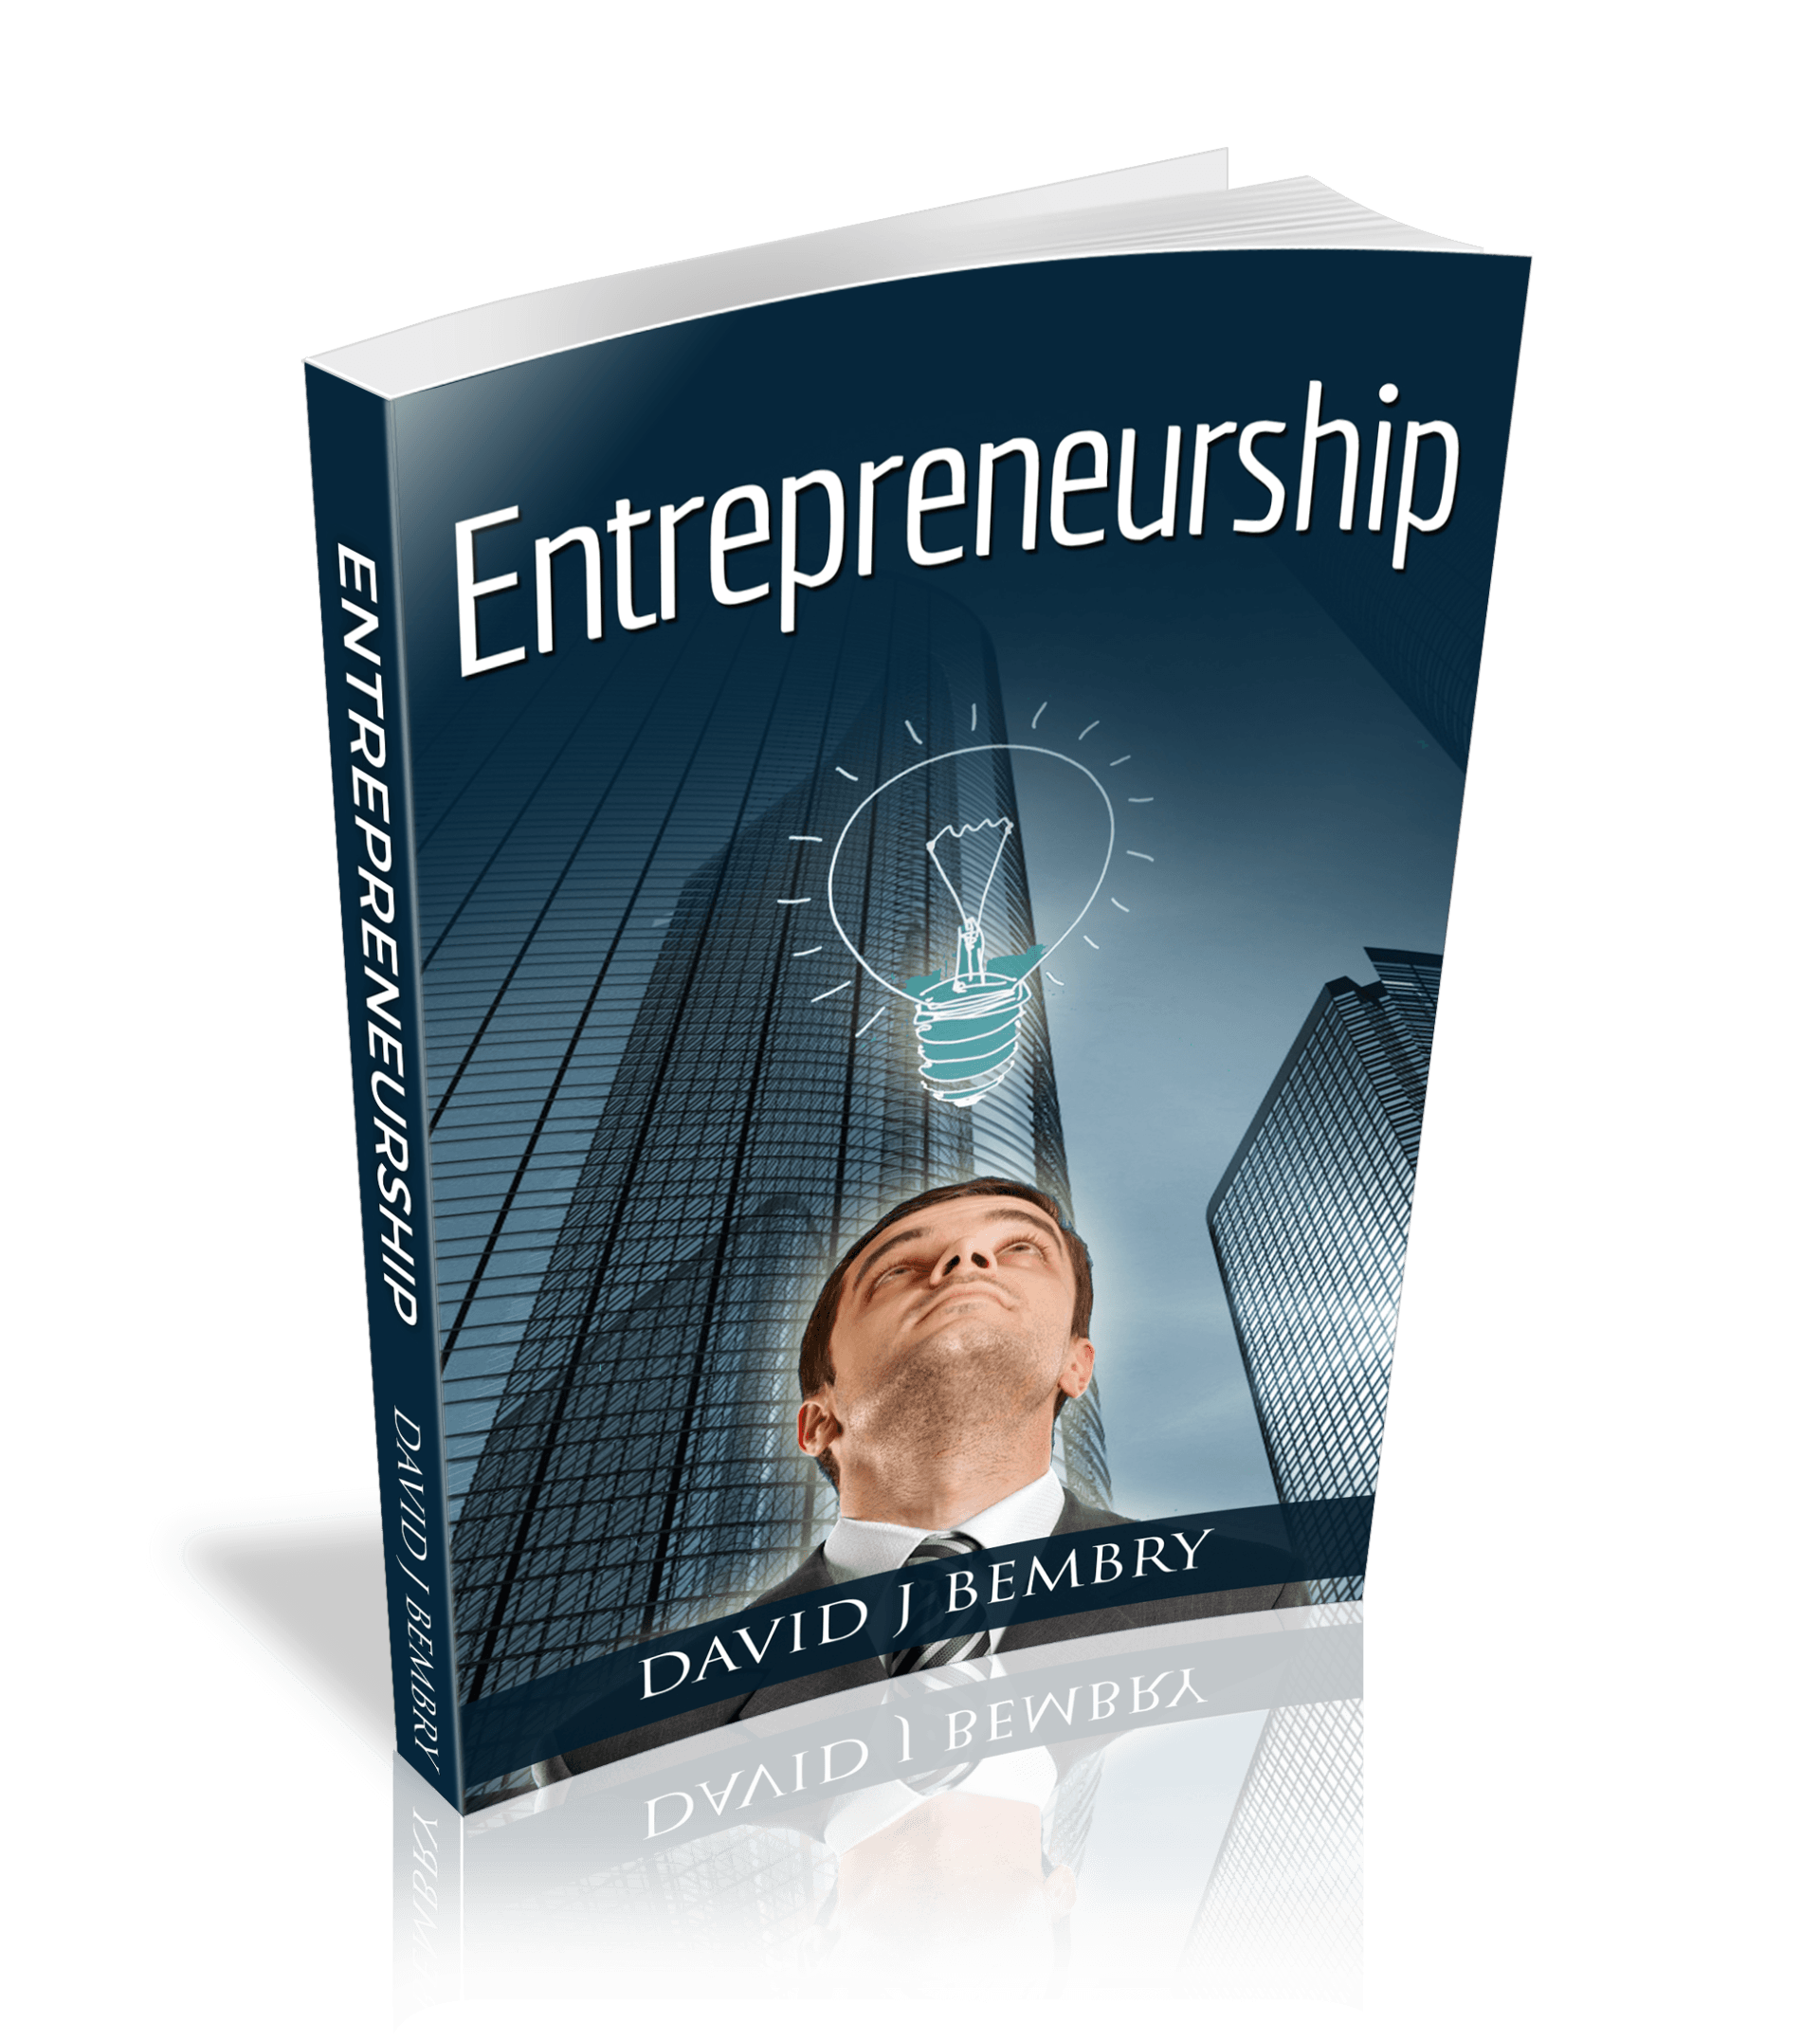 Entrepreneurship by David J Bembry